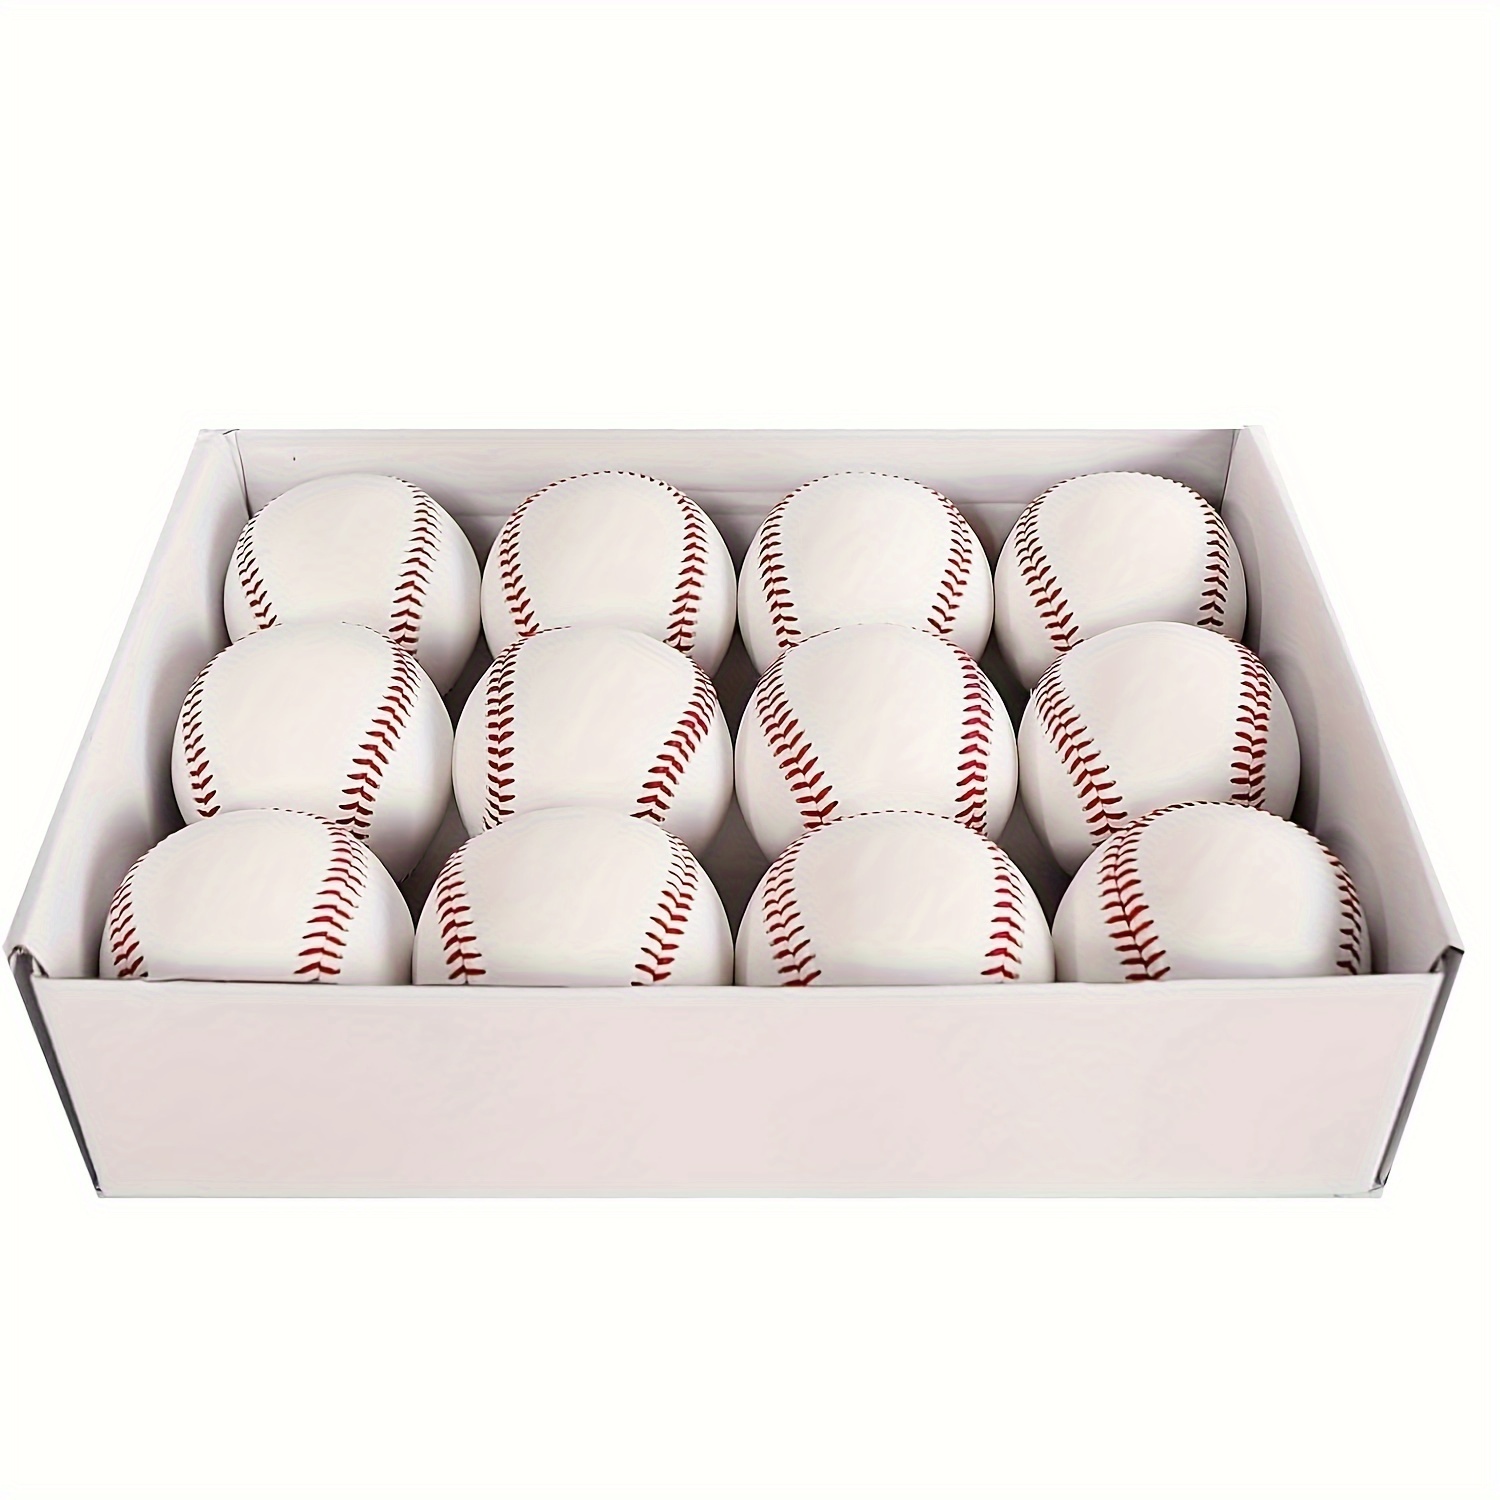 

12pcs Standard Size Baseballs, Training Practice Baseball, For Batting, Fielding, Hitting, Pitching, Practice